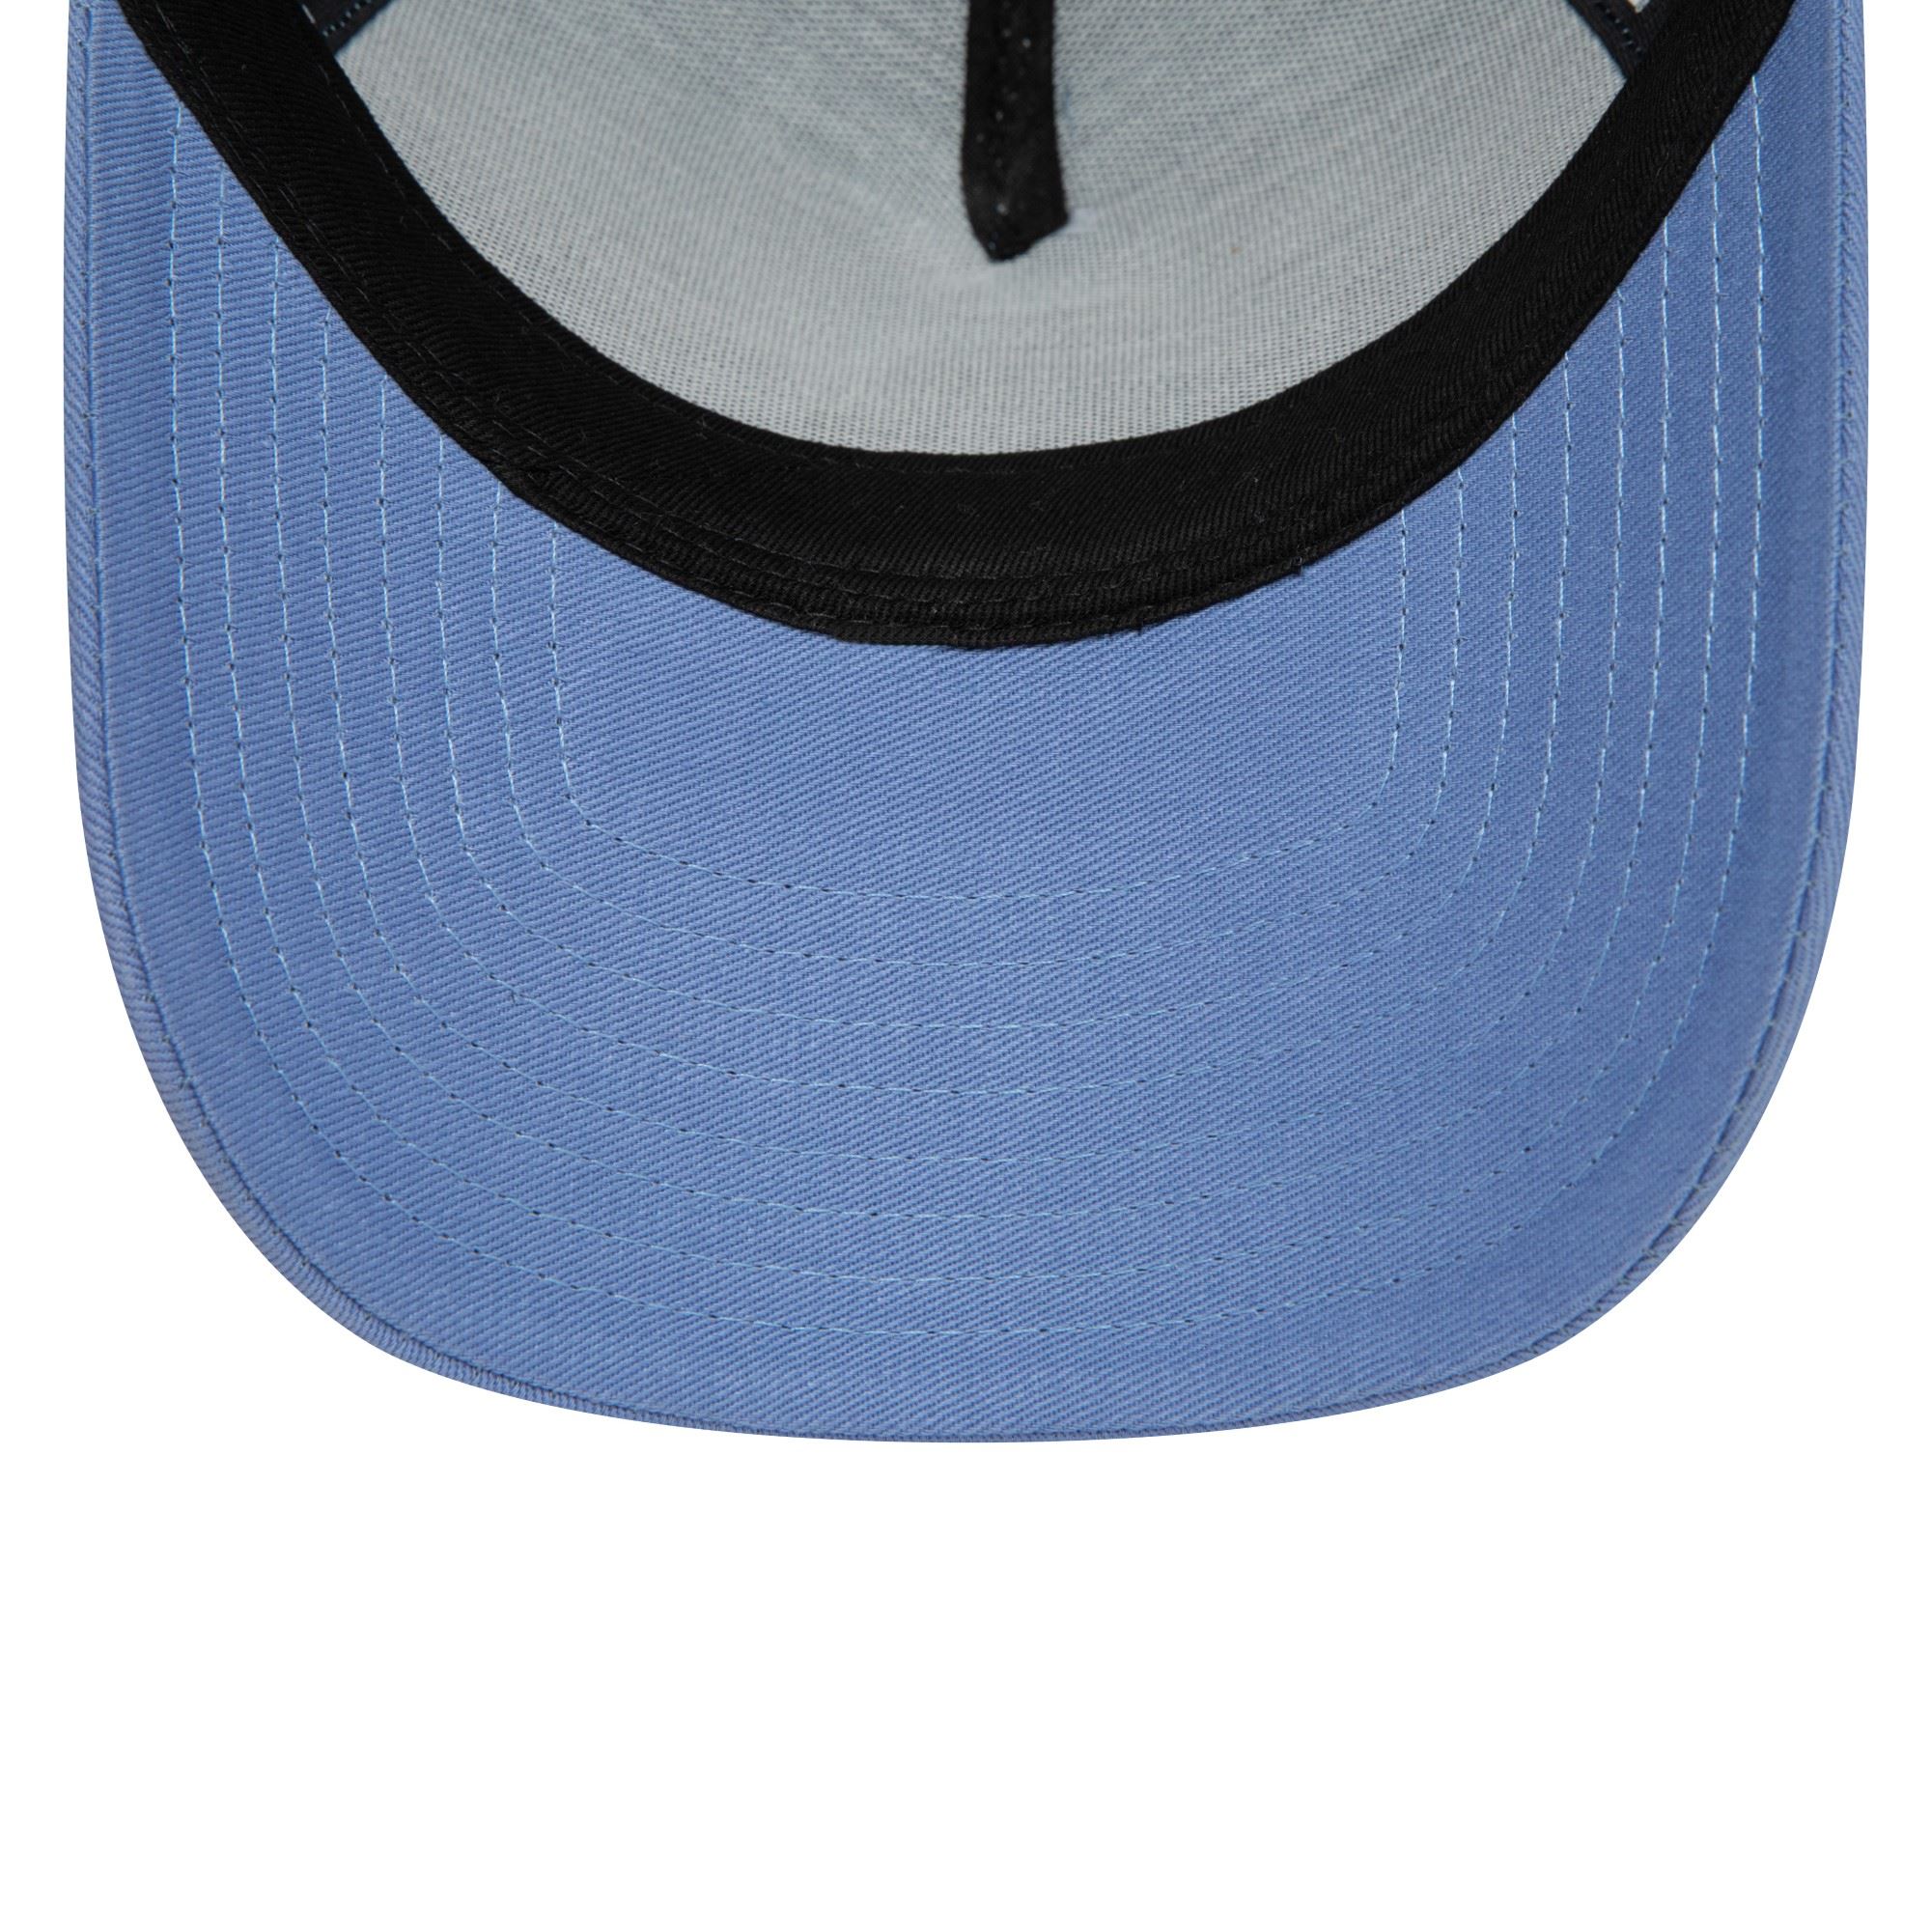 Los Angeles Dodgers MLB Seasonal Blau Verstellbare E-Frame Cap New Era